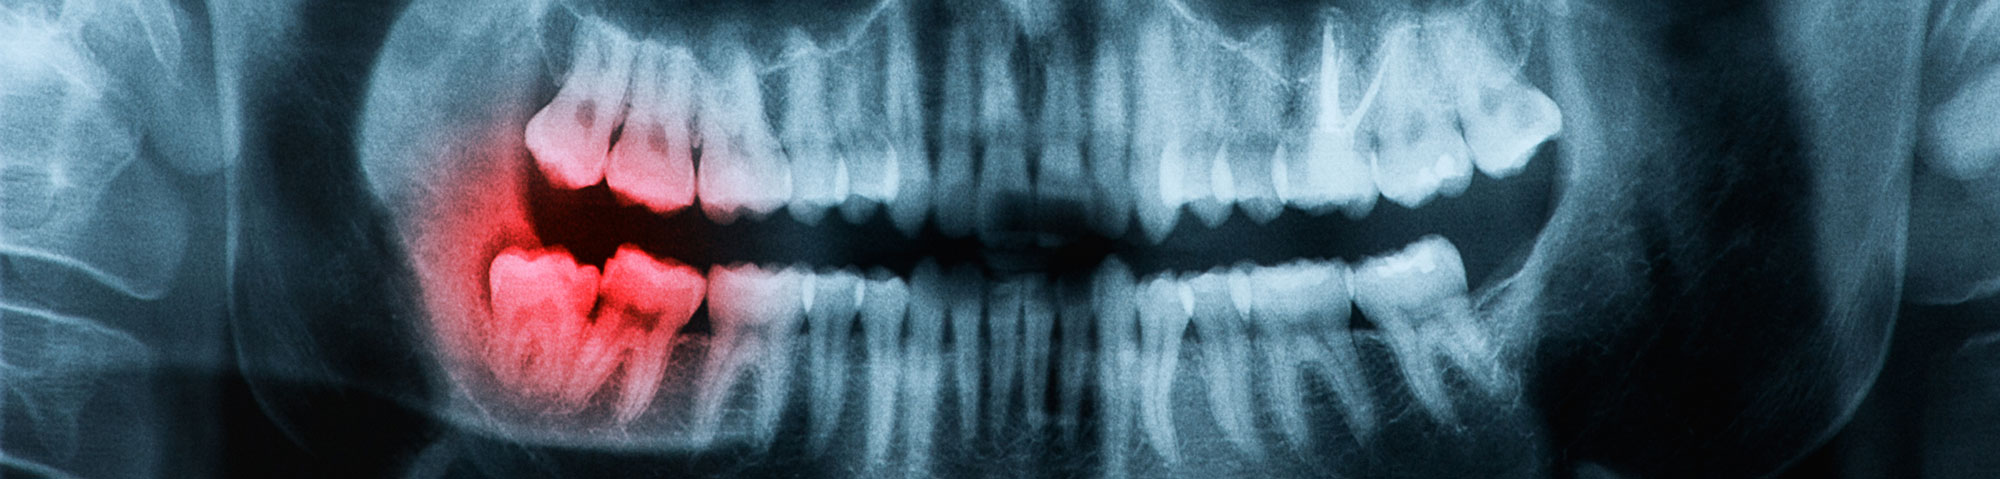 x-ray of impacted wisdom teeth